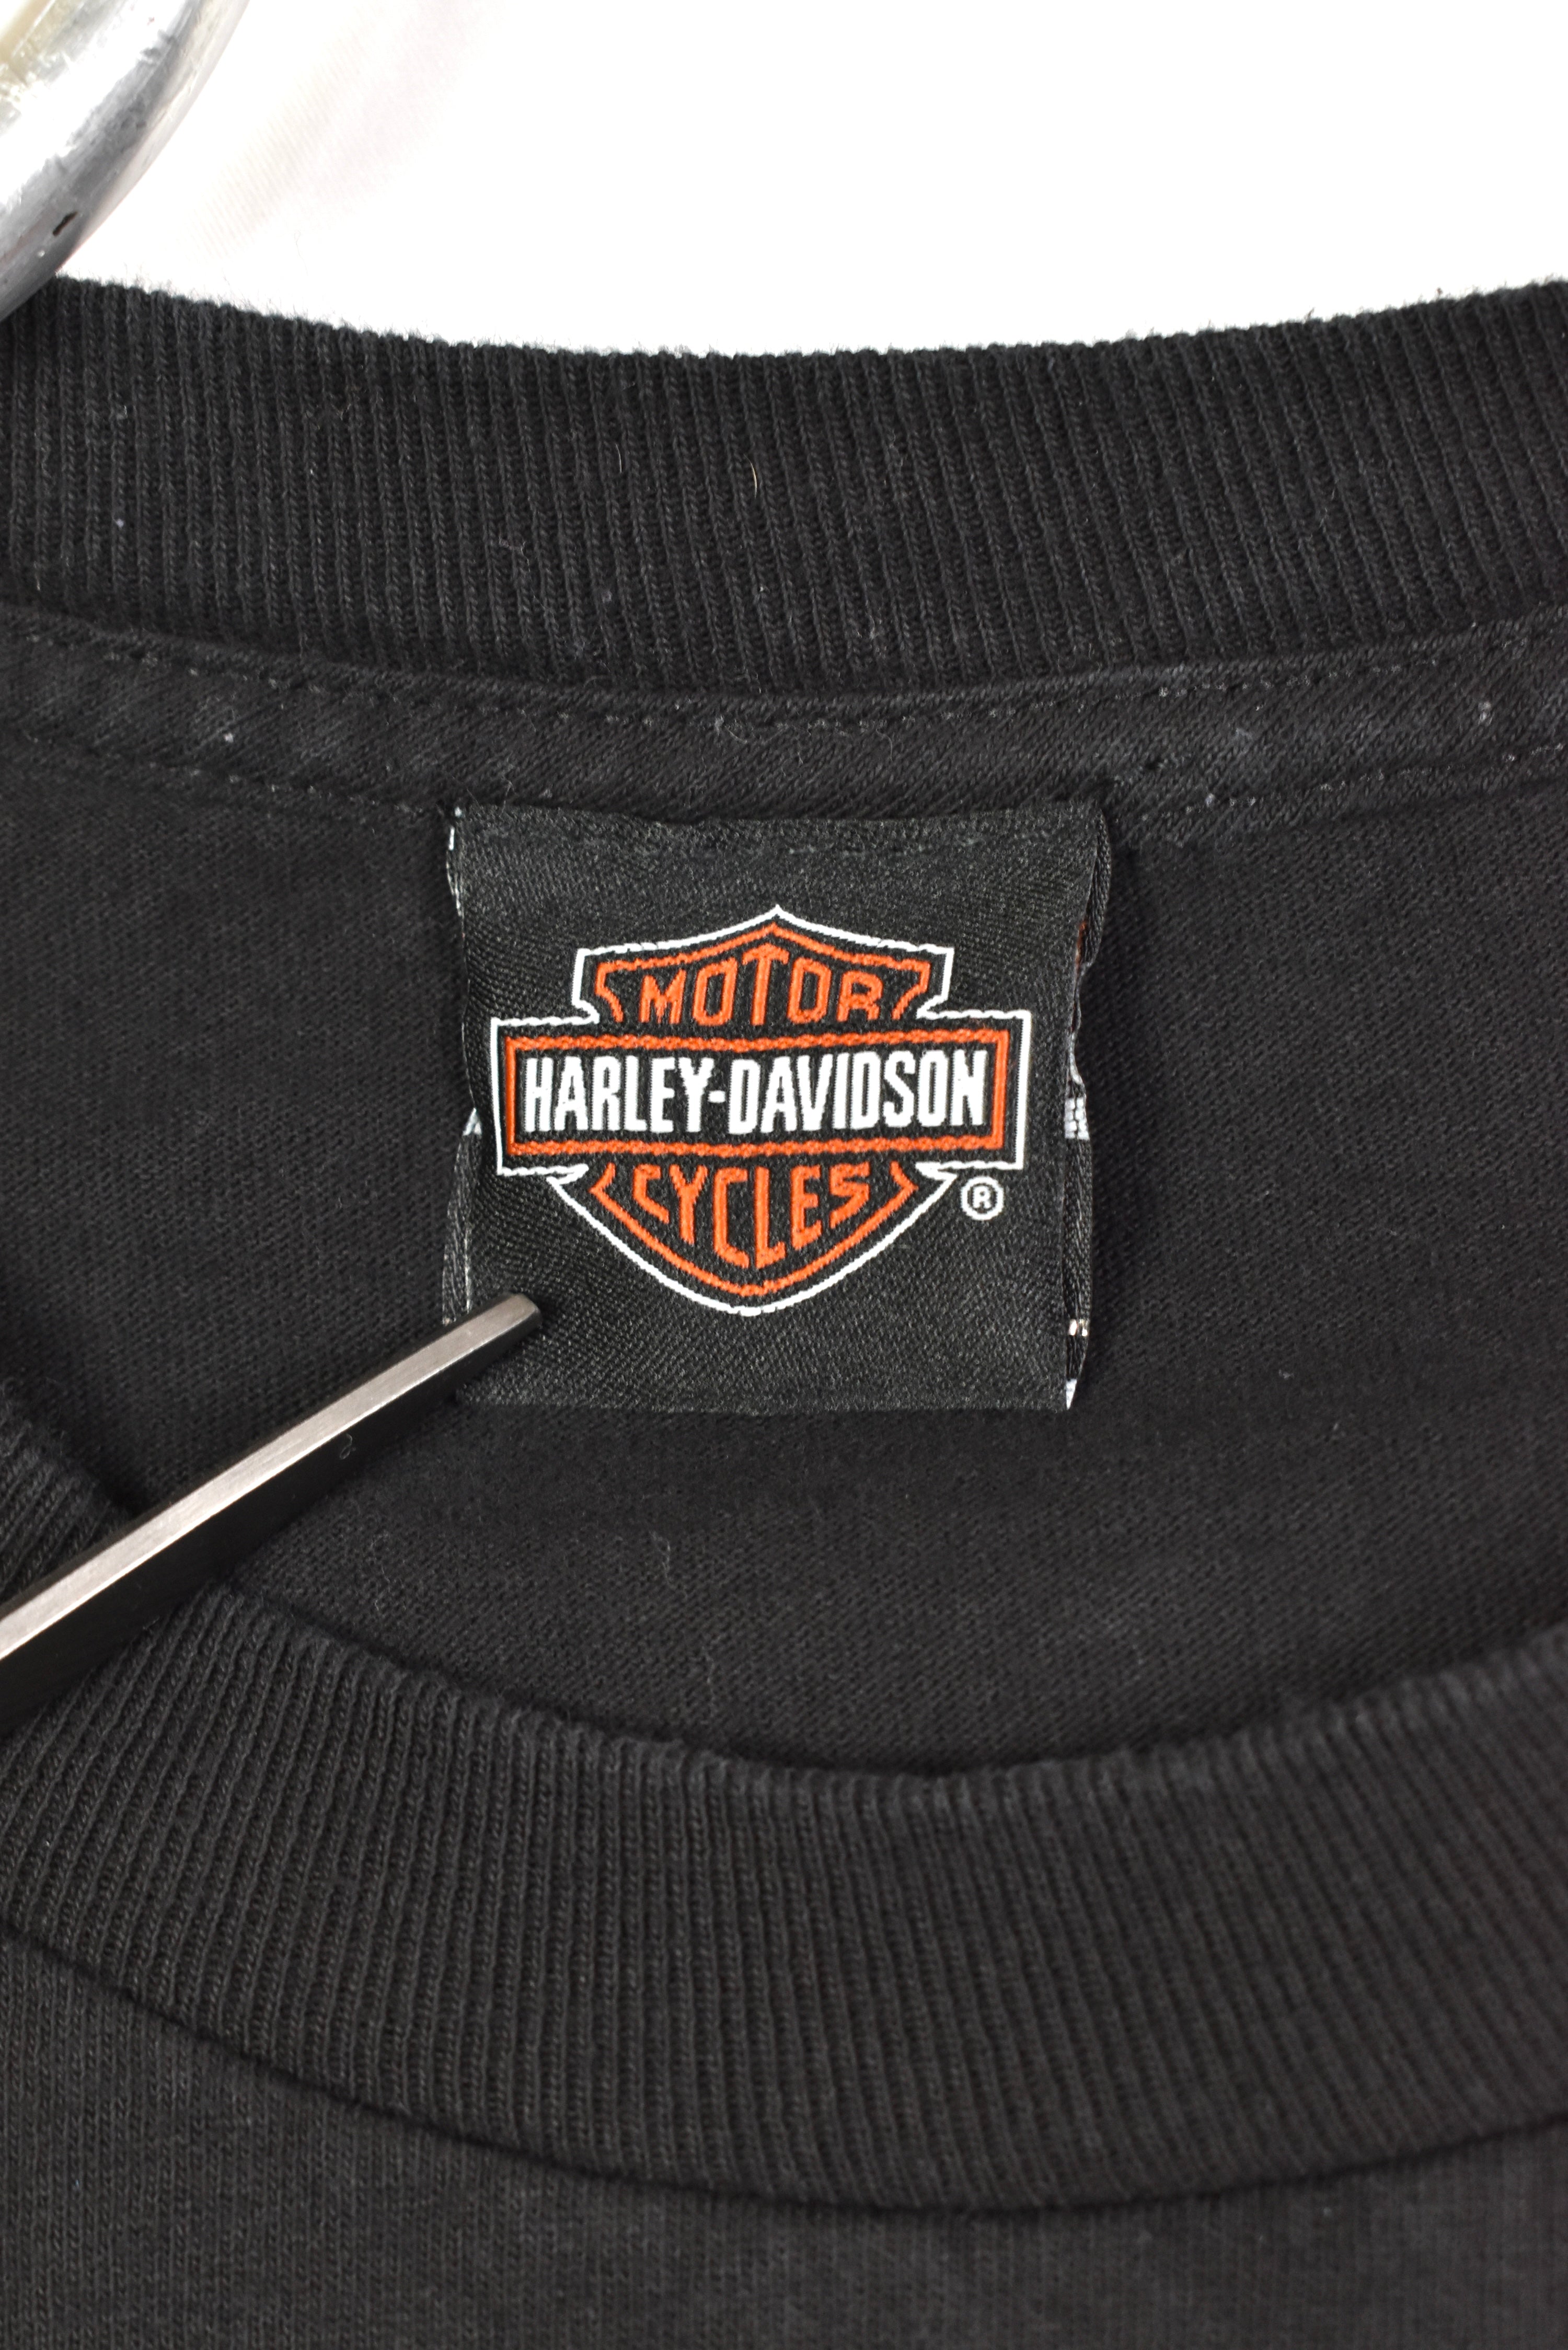 Modern Harley Davidson shirt, motorcycle biker tee - XXXL, black HARLEY DAVIDSON